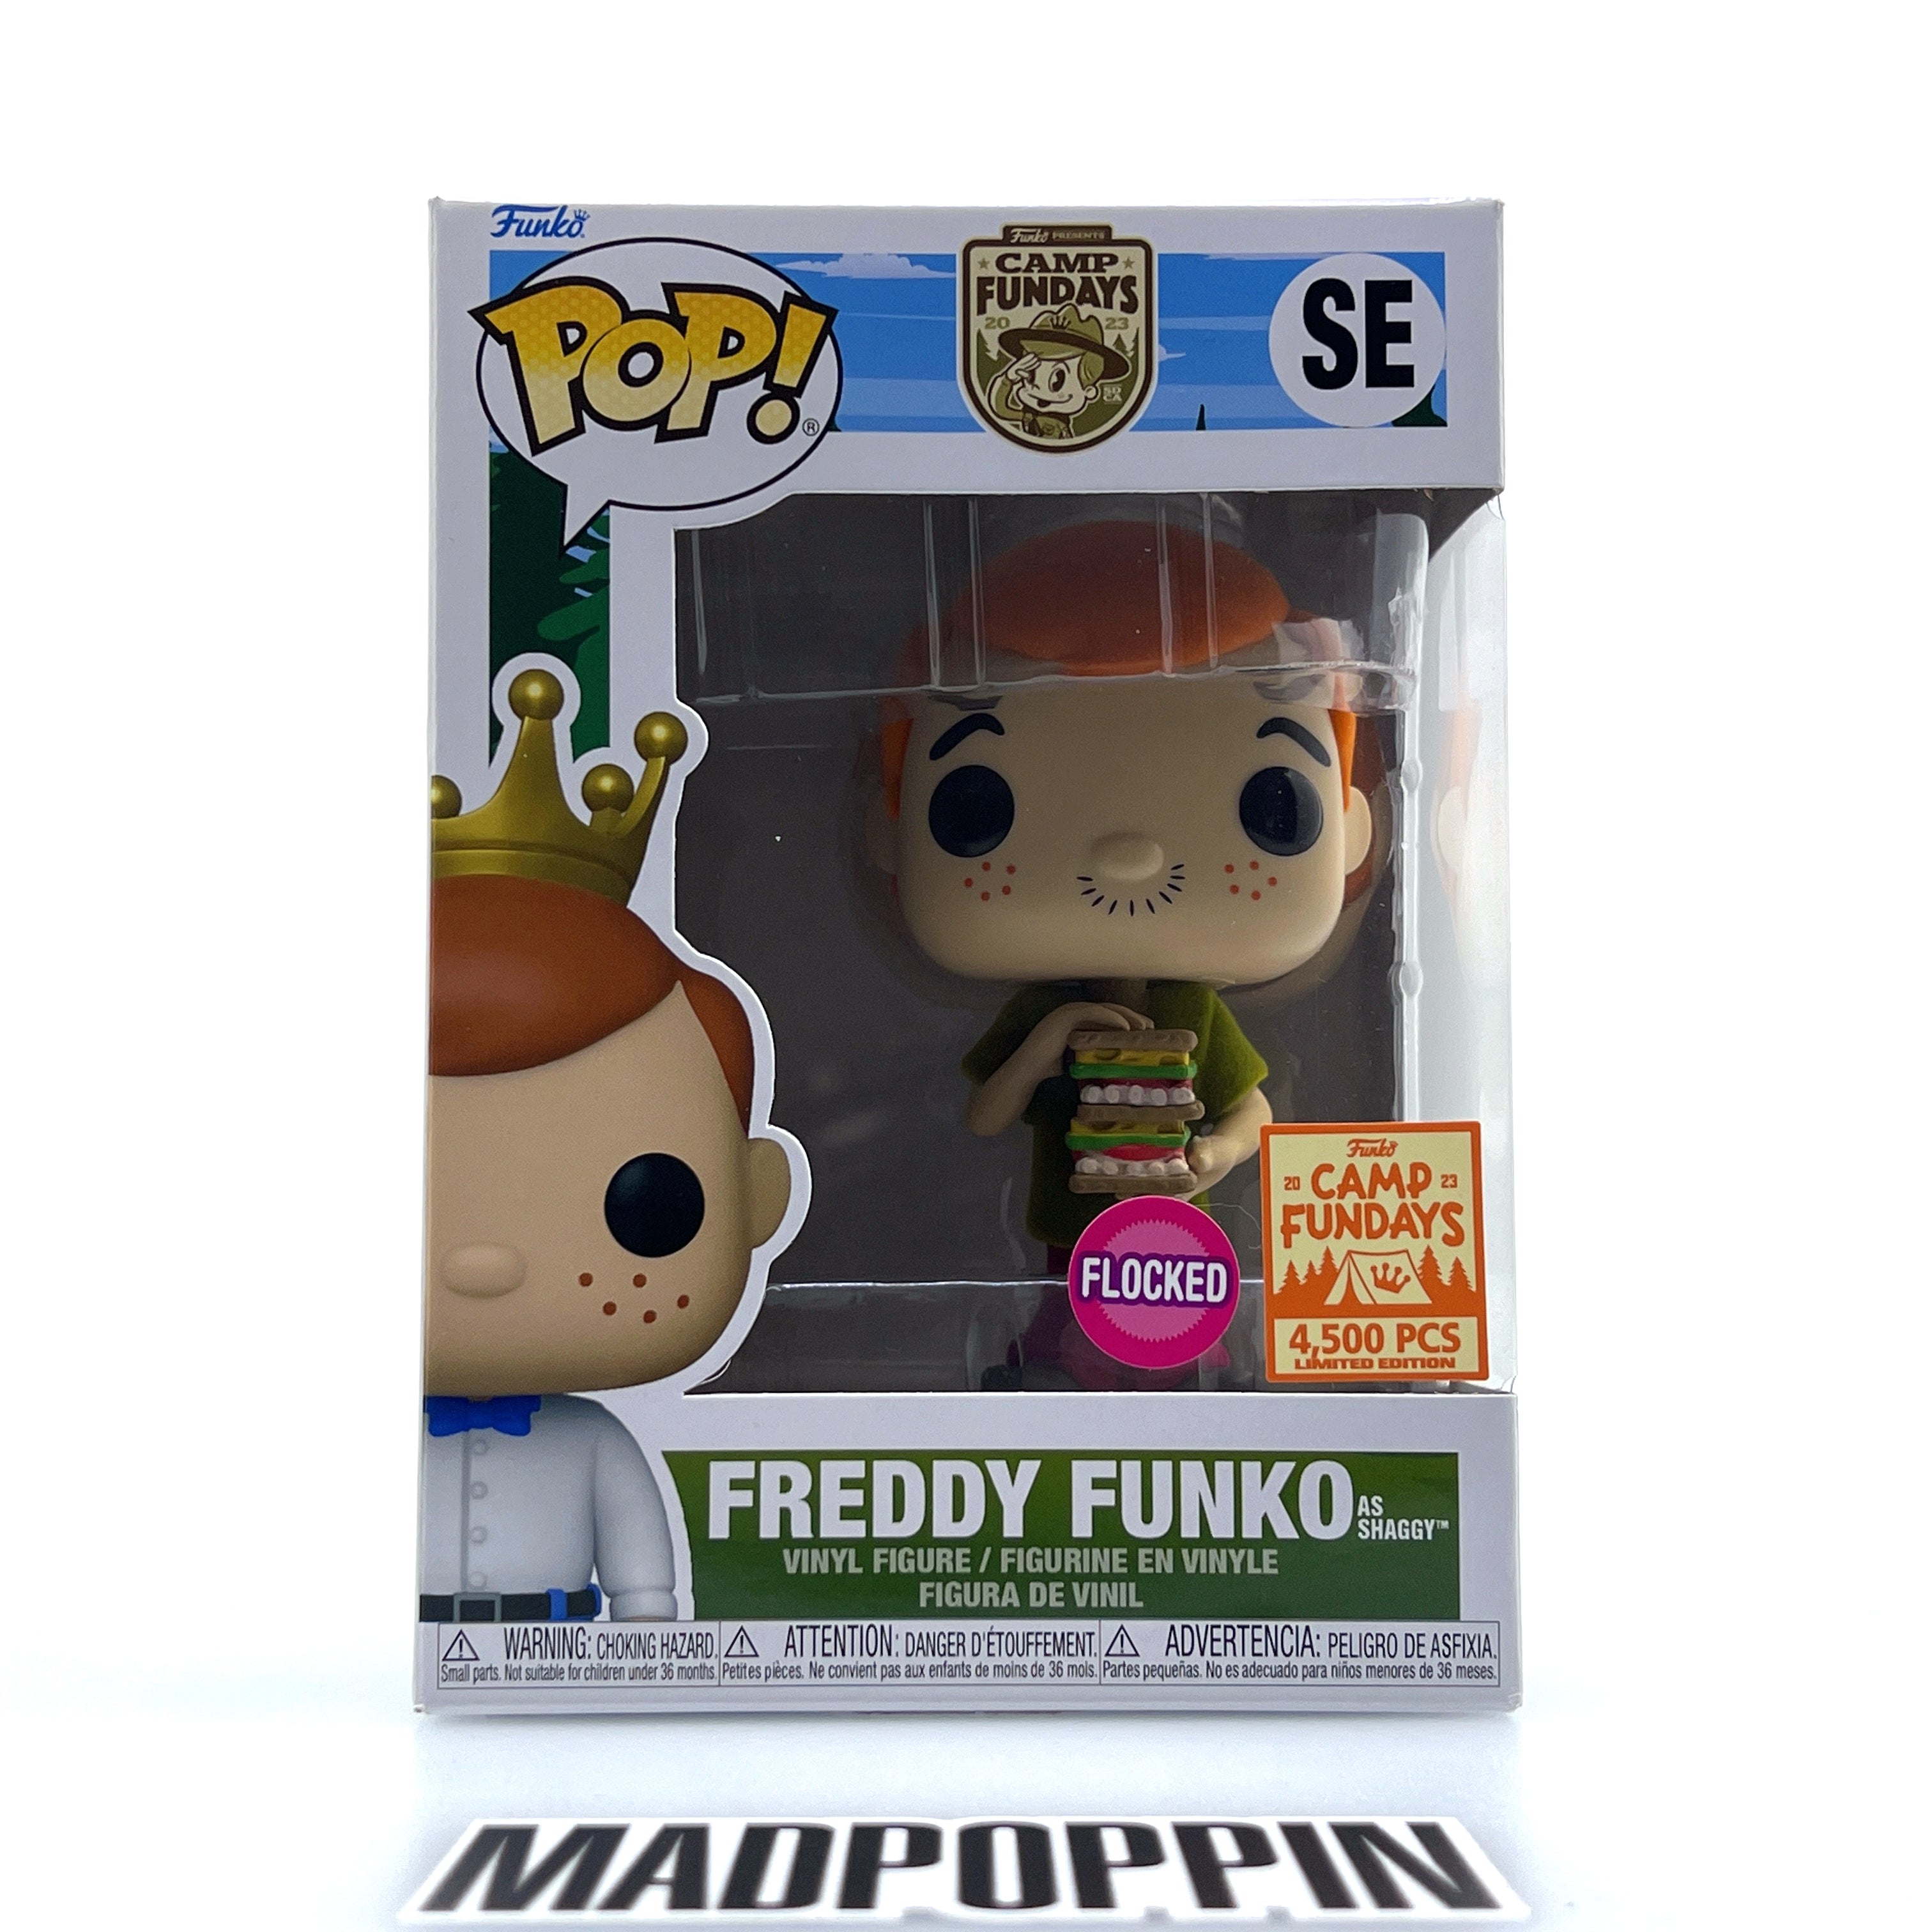 Funko Pop Camp Fundays Freddy Funko as Shaggy Flocked LE 4500 Pcs SE